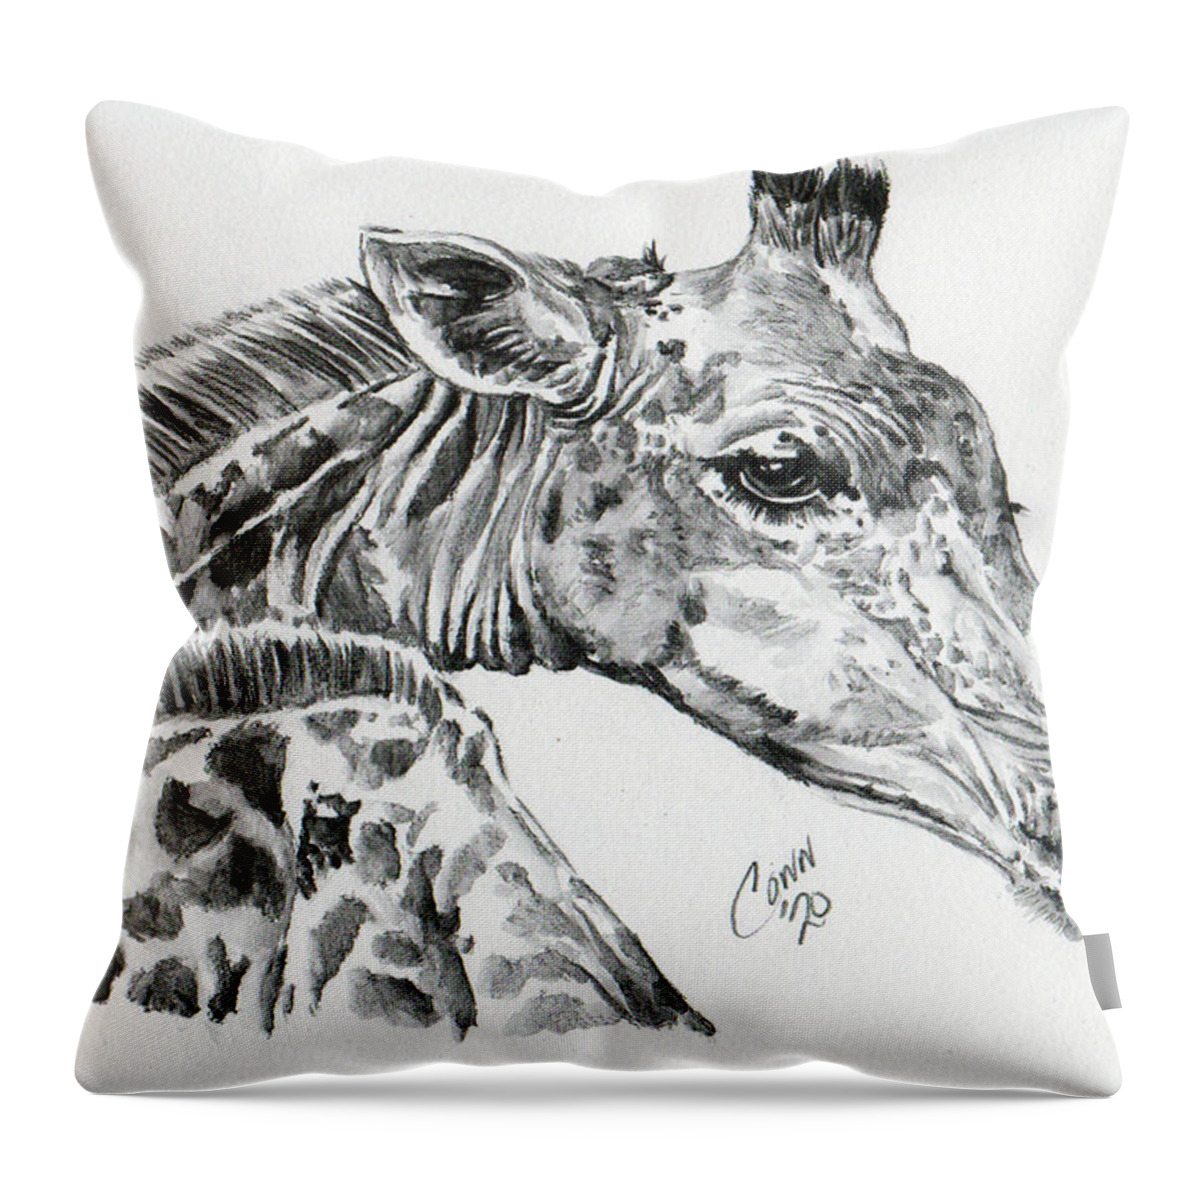 Giraffe Throw Pillow featuring the drawing Giraffe by Shawn Conn